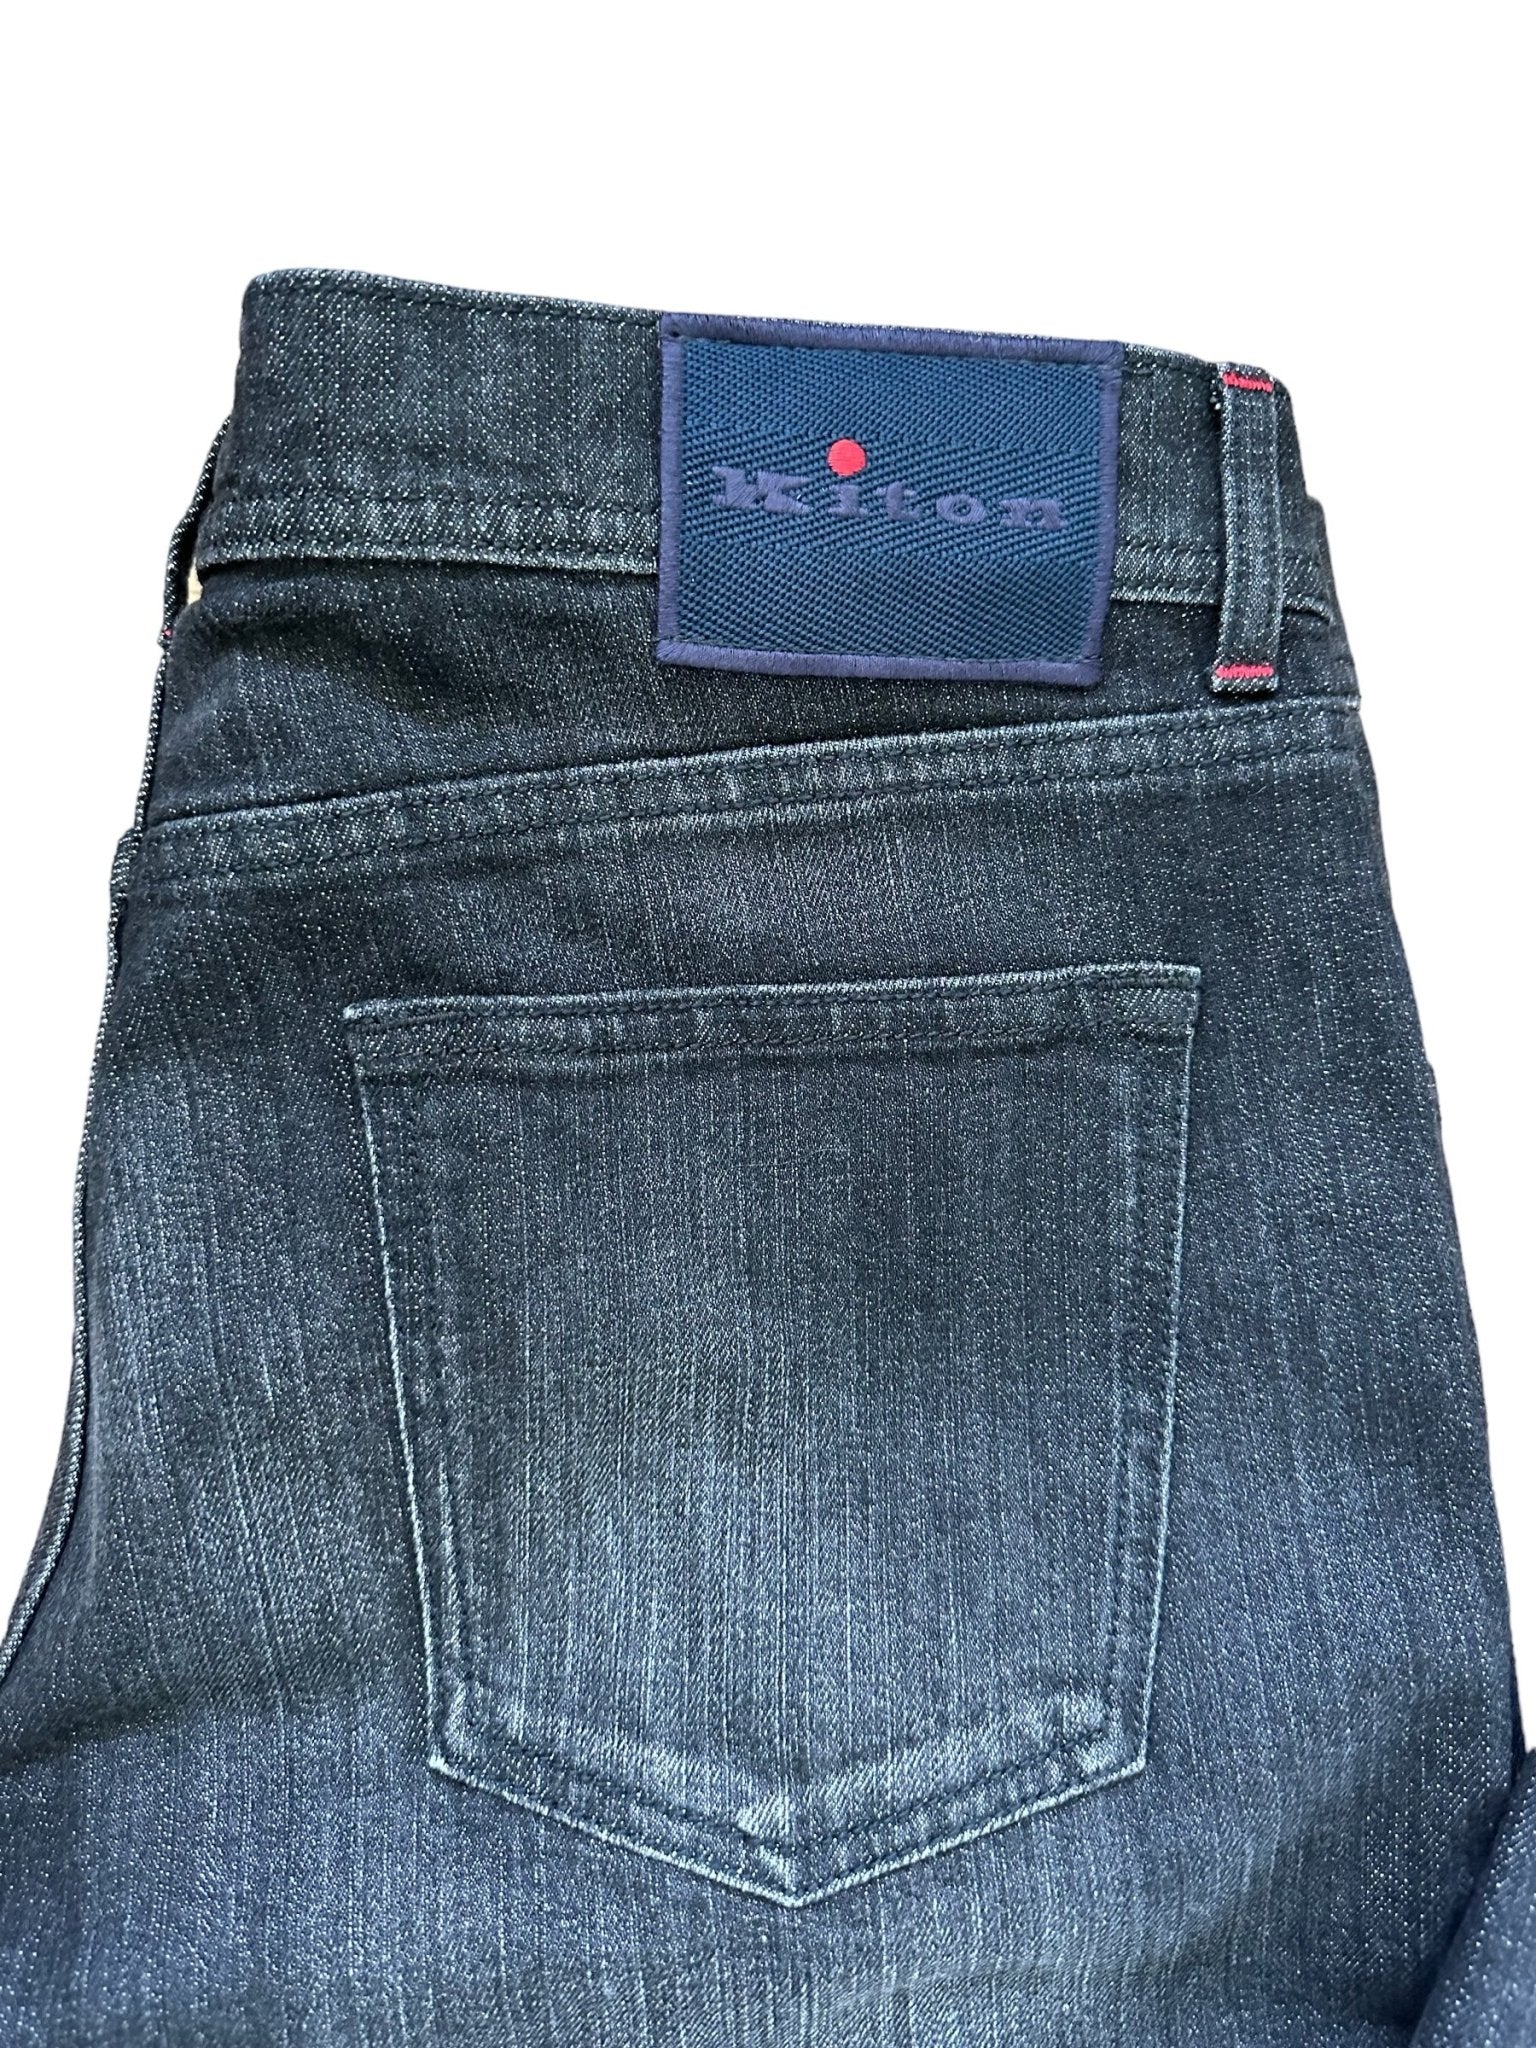 Kiton Jeans - 24/7 Clothing